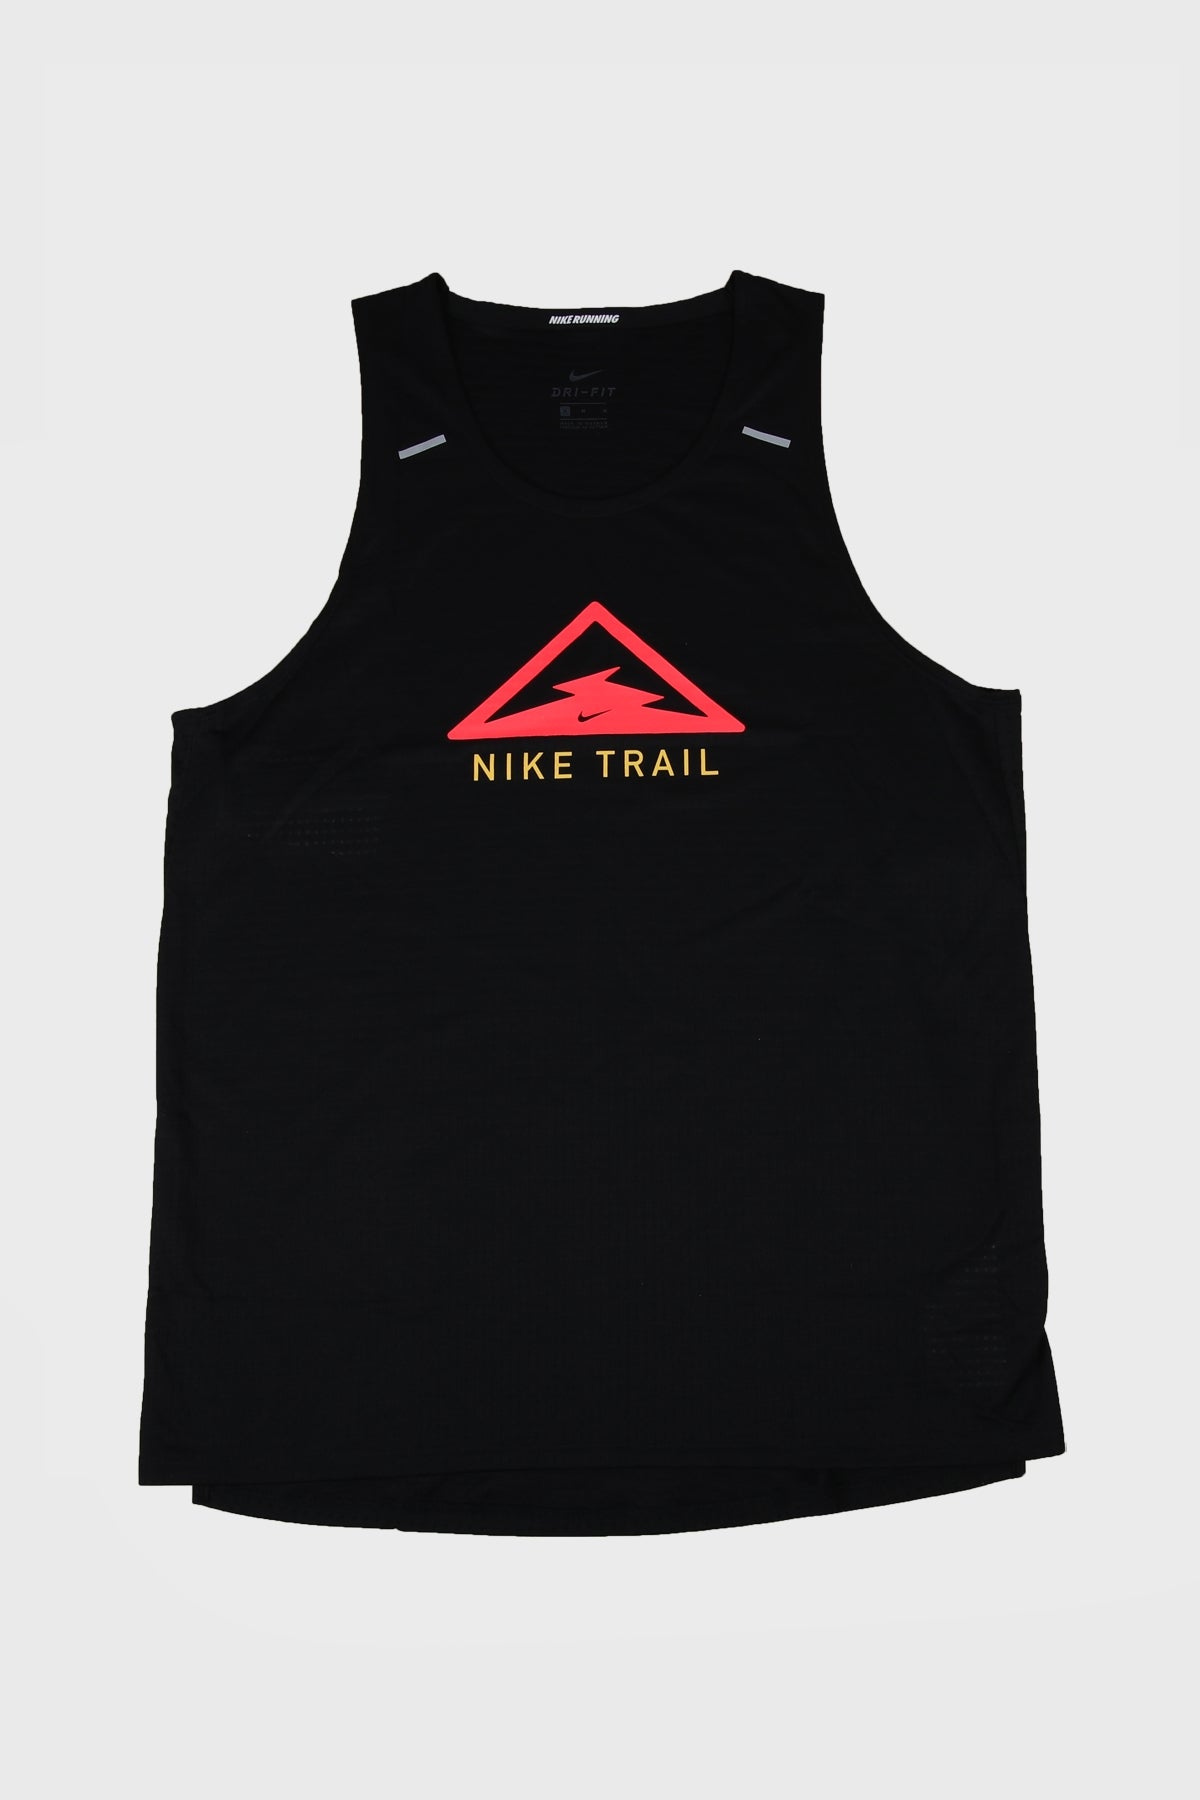 Nike - rise 365 tank trail